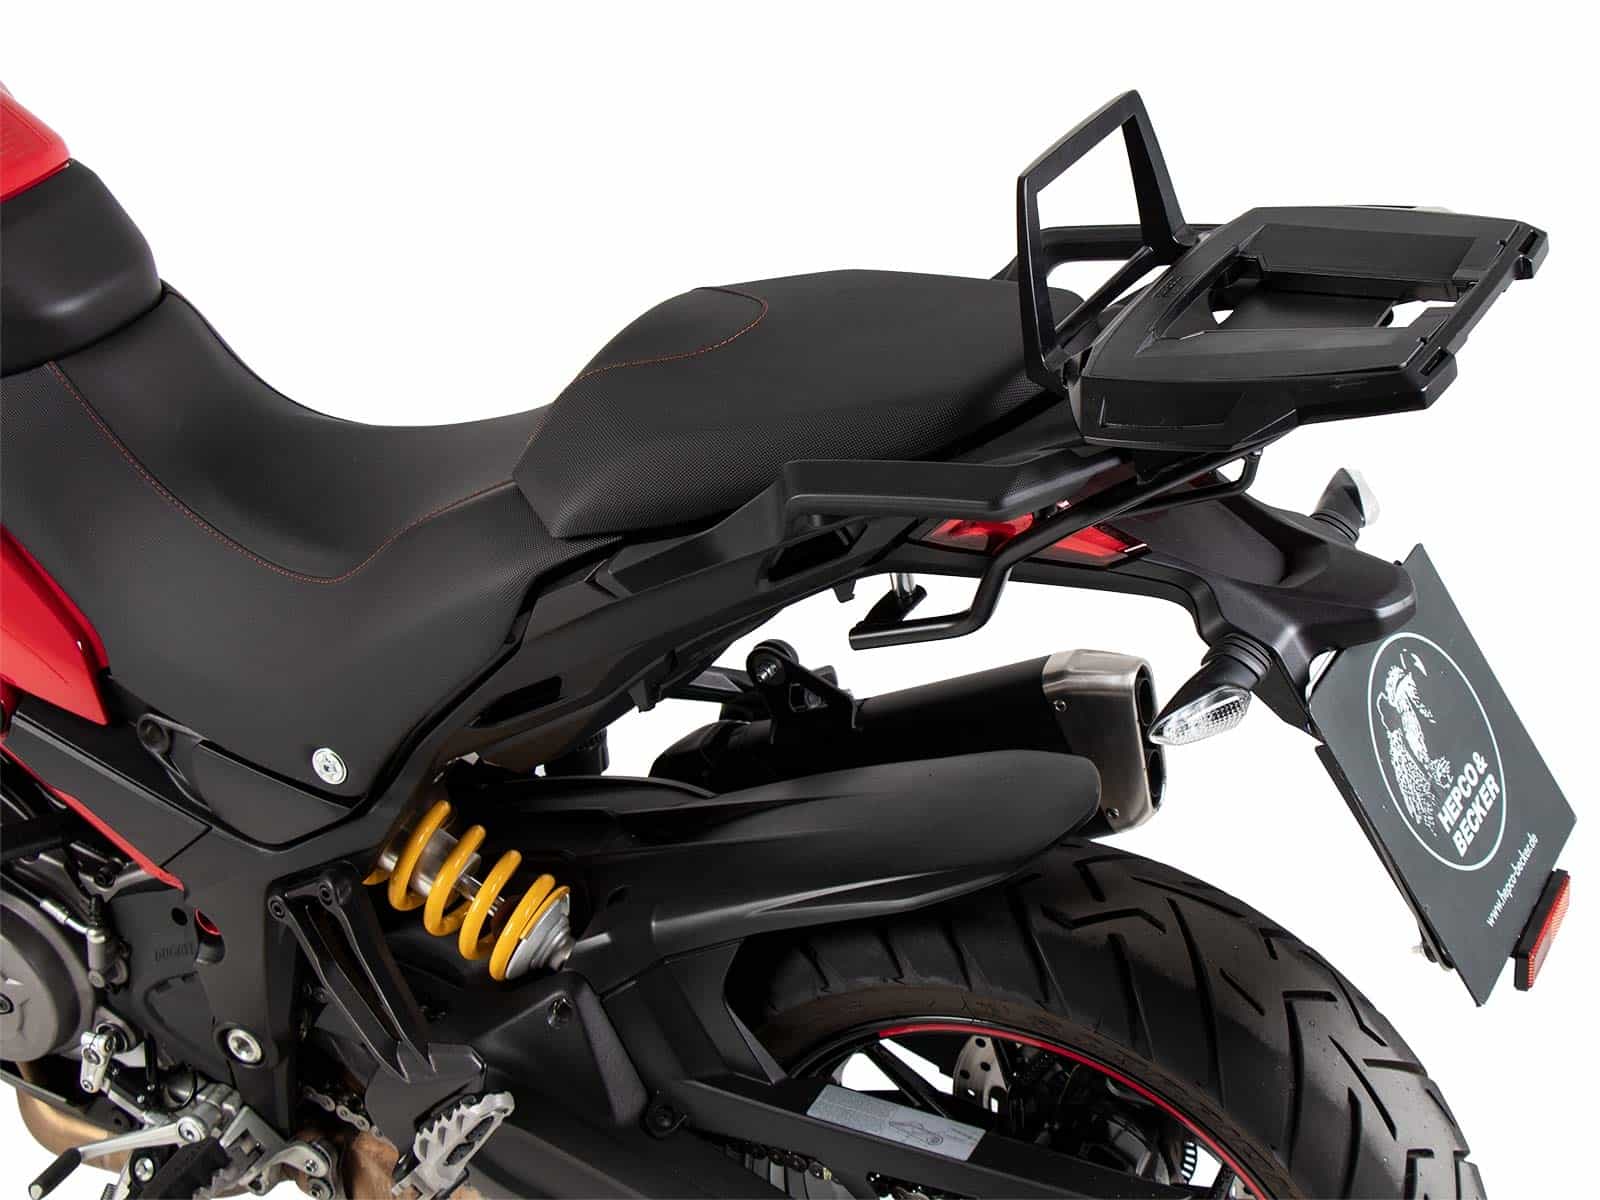 Alurack top case carrier black for Ducati Multistrada 1260 Enduro (2019-)